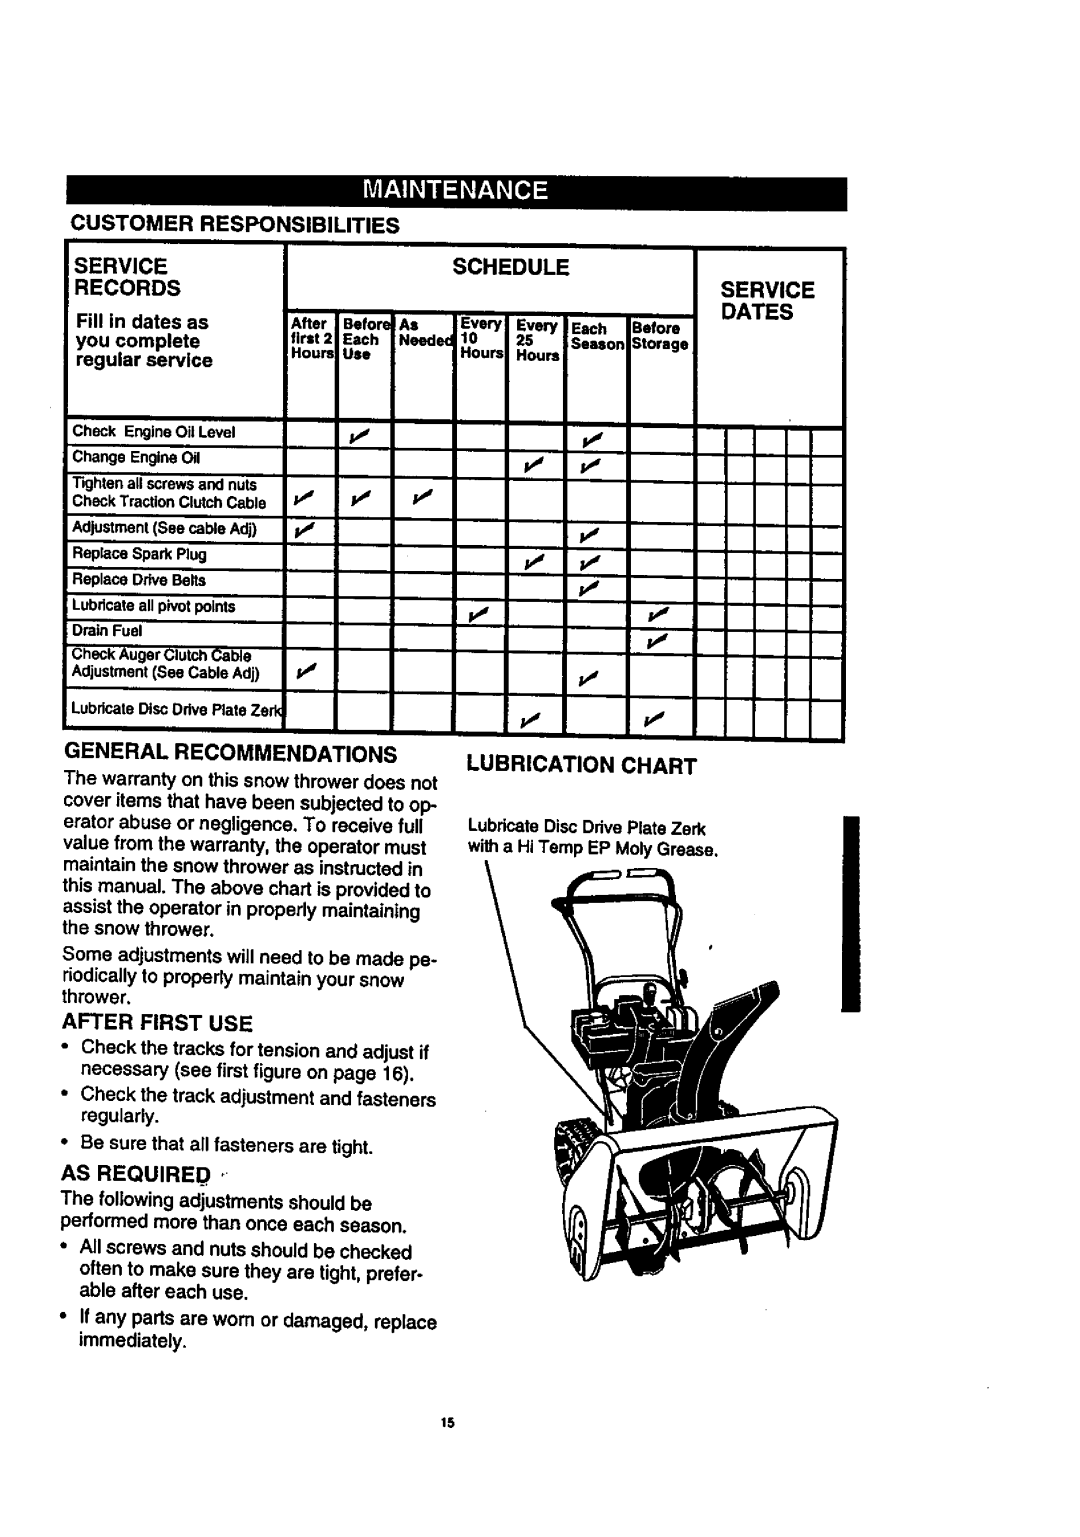 Craftsman 536.8884 manual Customer Responsibilities Serviceschedule Records, Service Dates 